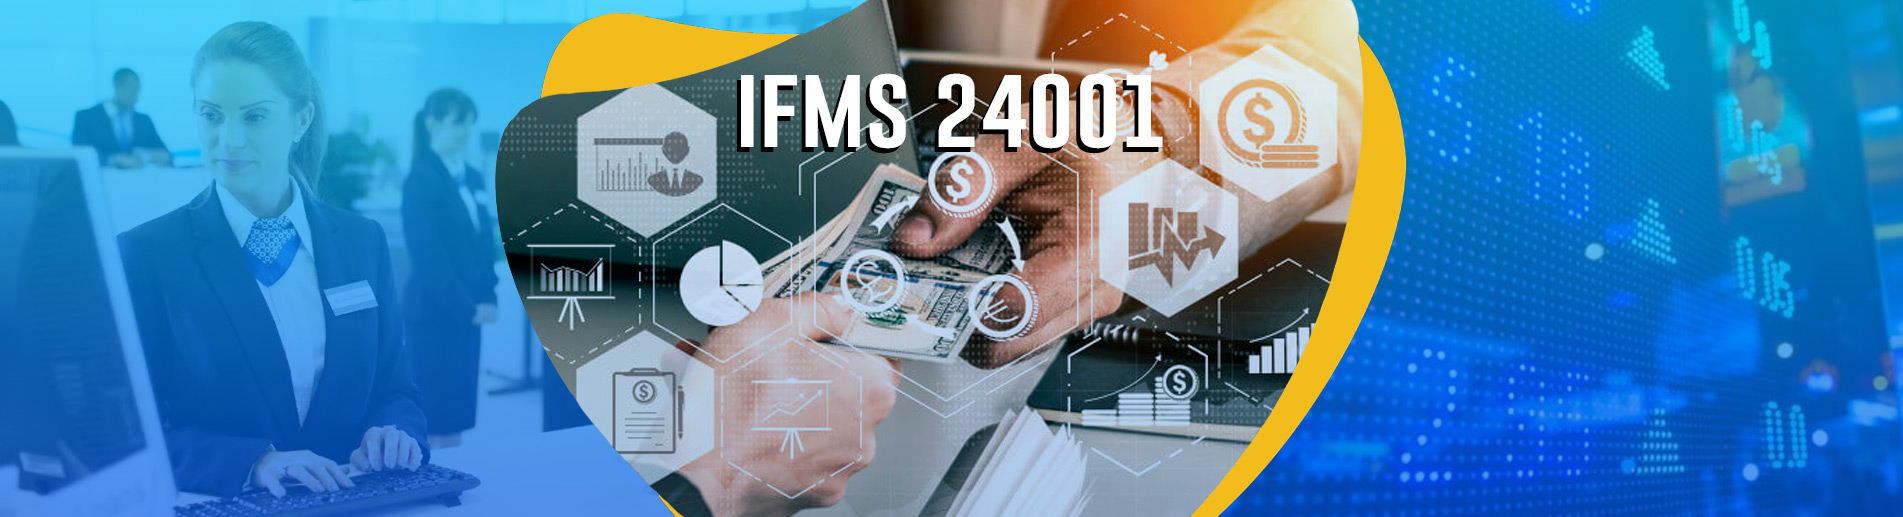 IFMS 24001 SERTİFİKA Bankacılık ve Finans